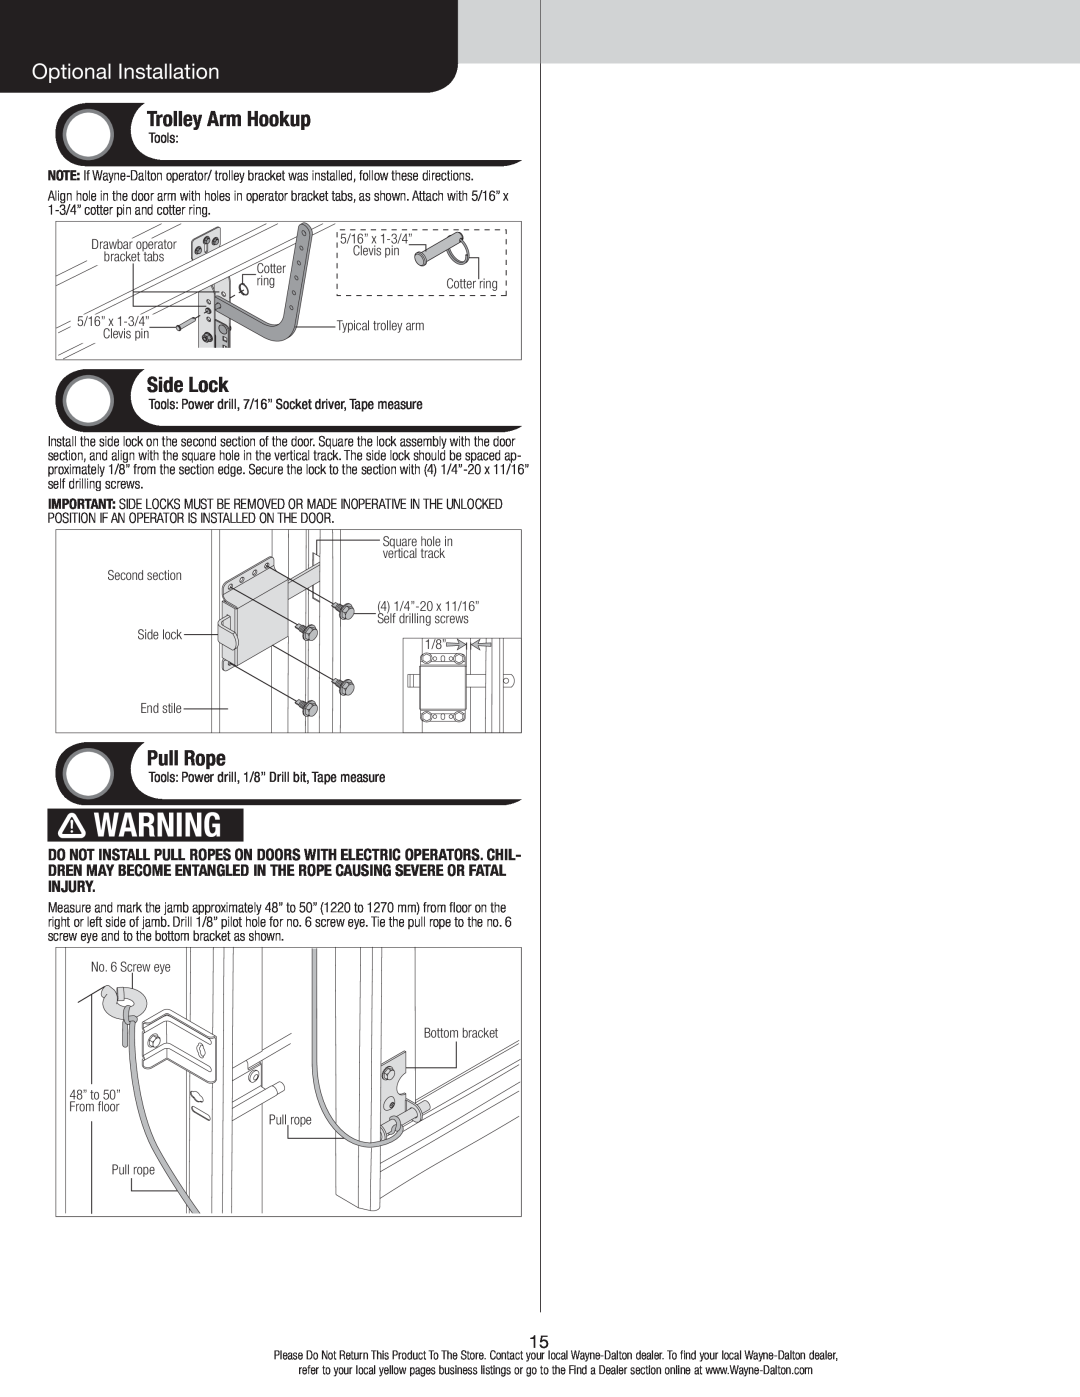 Wayne-Dalton 8300/8500 installation instructions Optional Installation, Trolley Arm Hookup, Side Lock, Pull Rope 